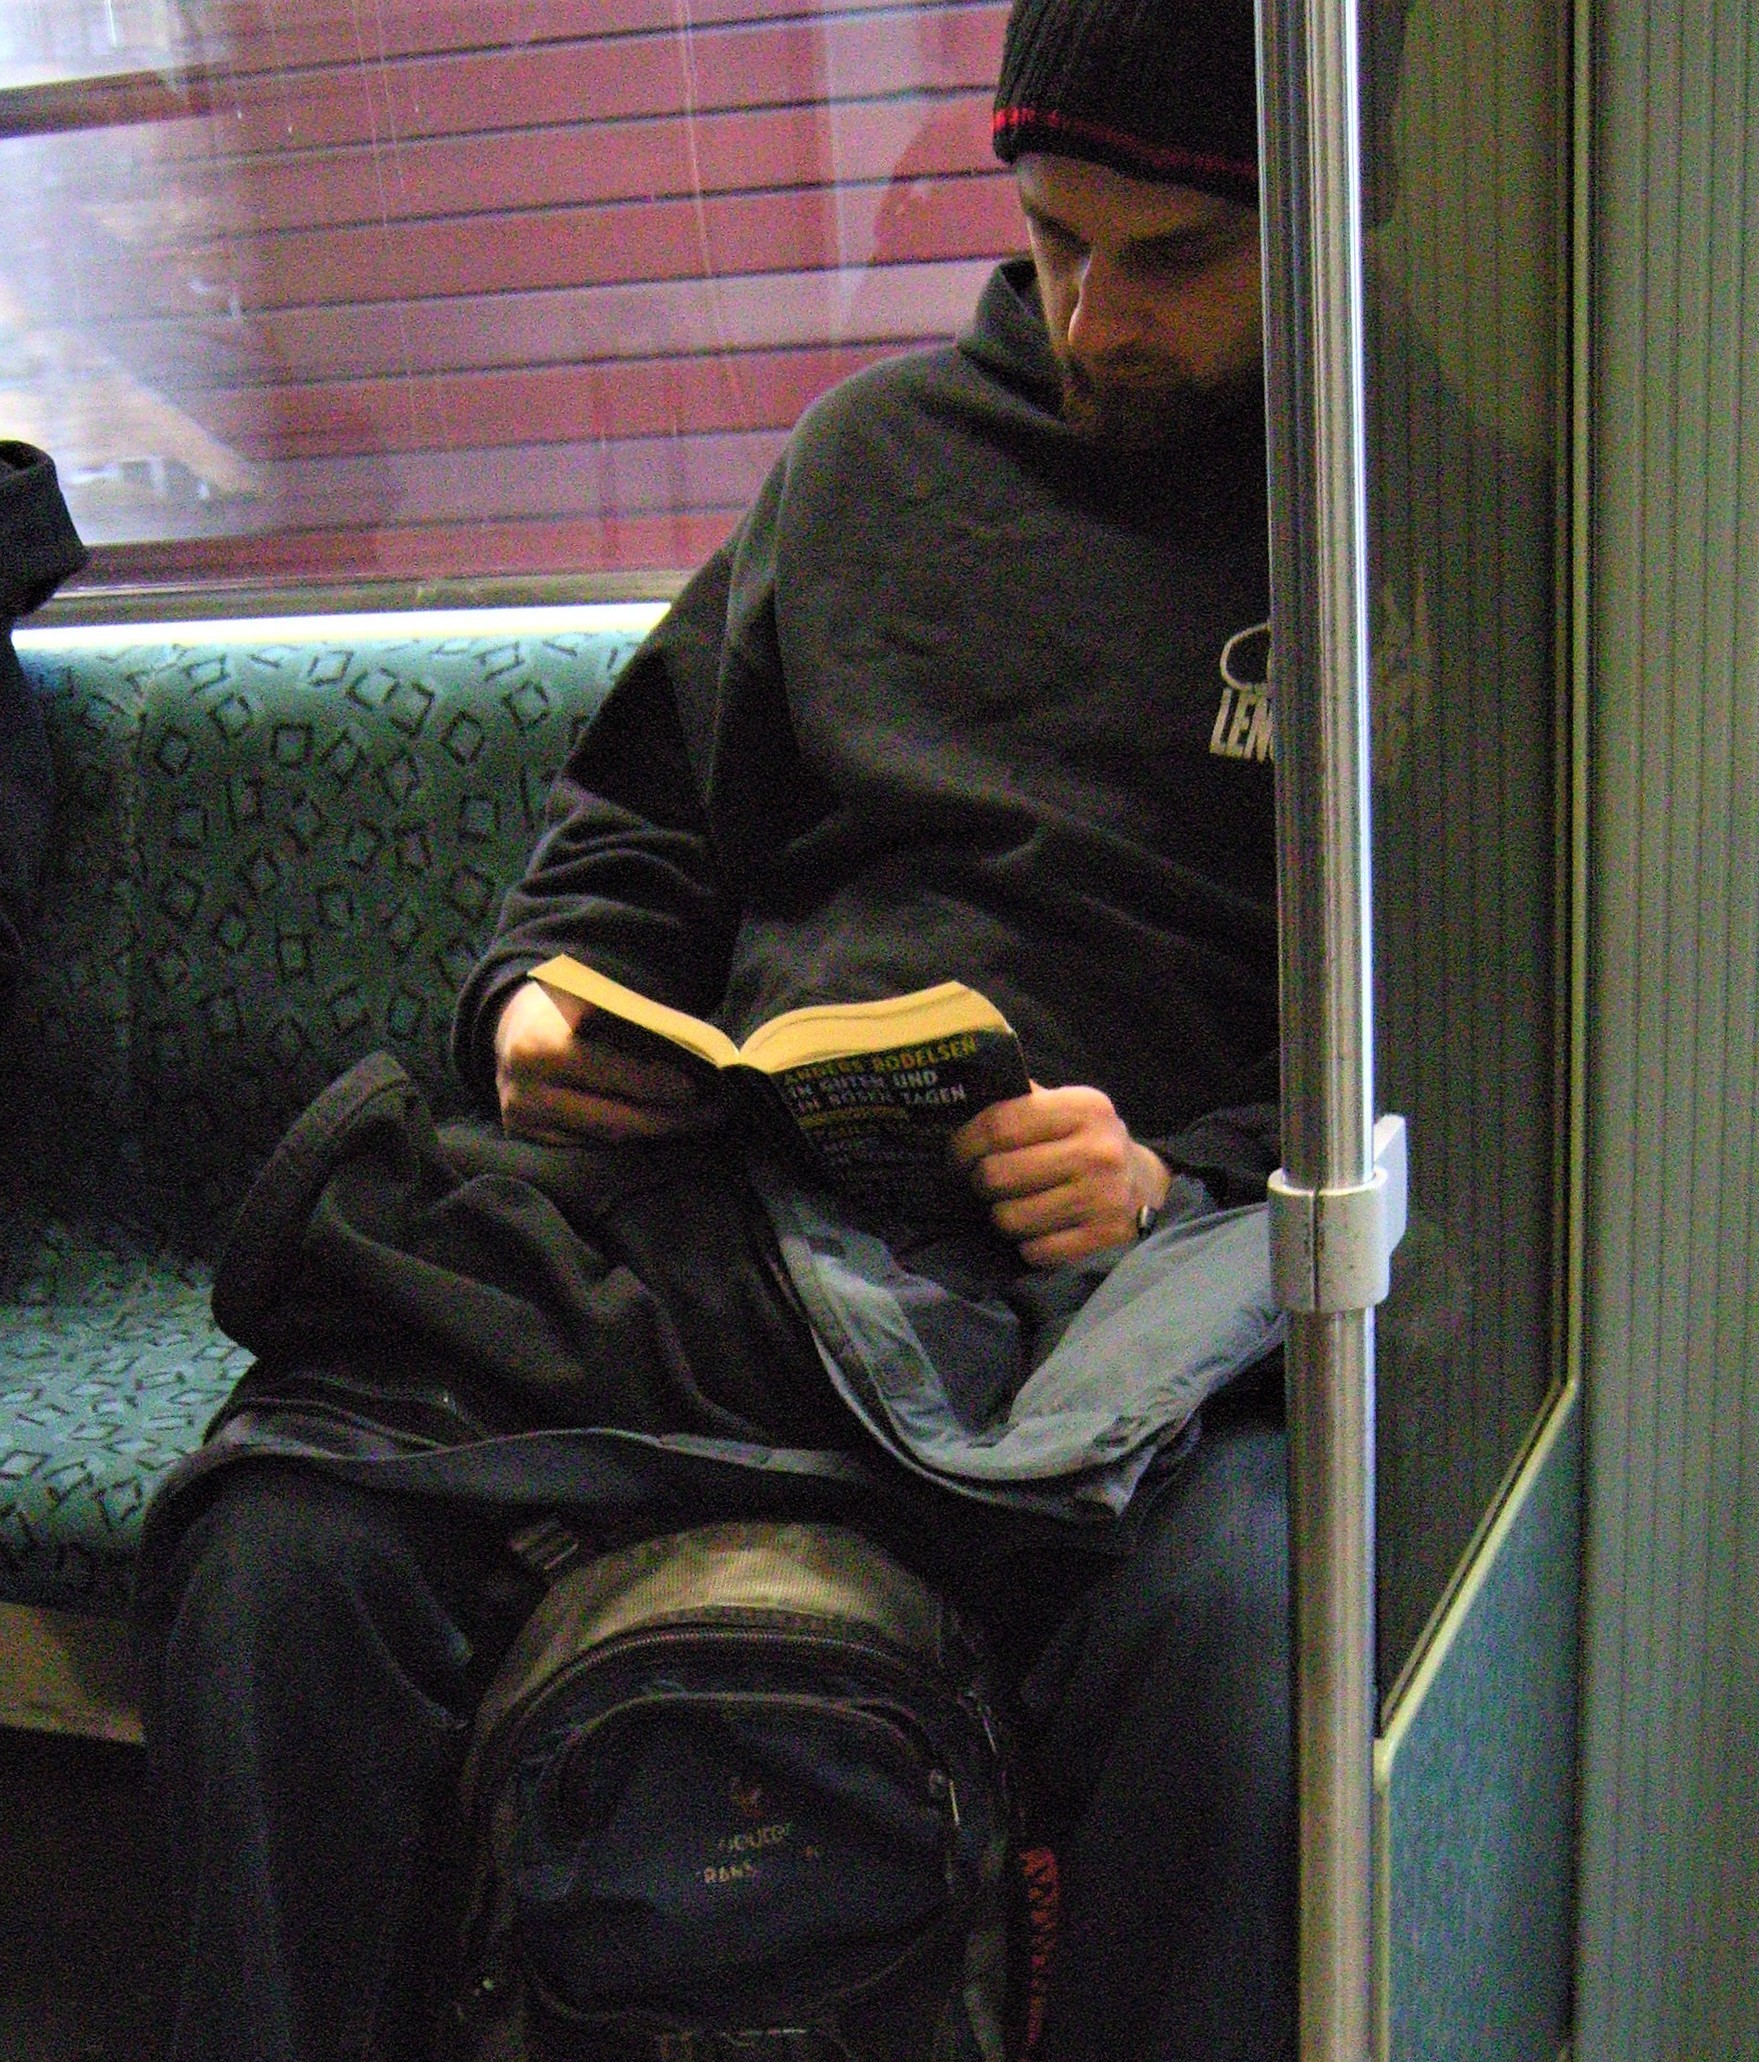 Urban commuter reading an Anders Bodelsen novel, Berlin, March 20, 2009